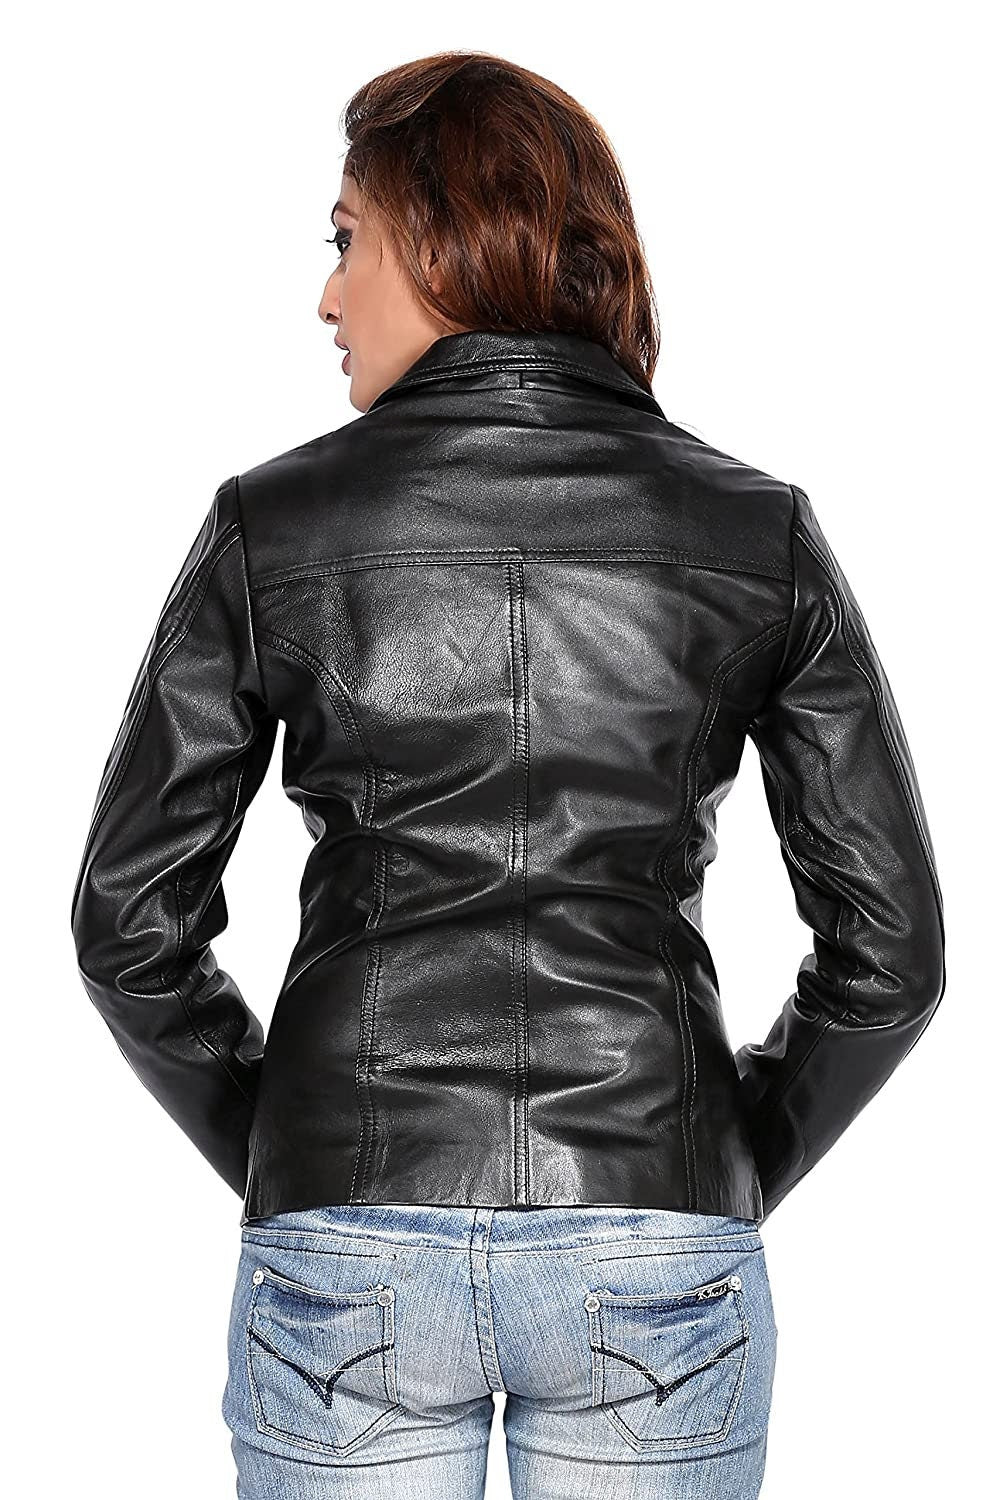 LINDSEY STREET Custom Made Genuine Leather Jacket for Women Stylish Slim Fit Leather Jacket Biker Casual Long Jacket Long Leather Blazer